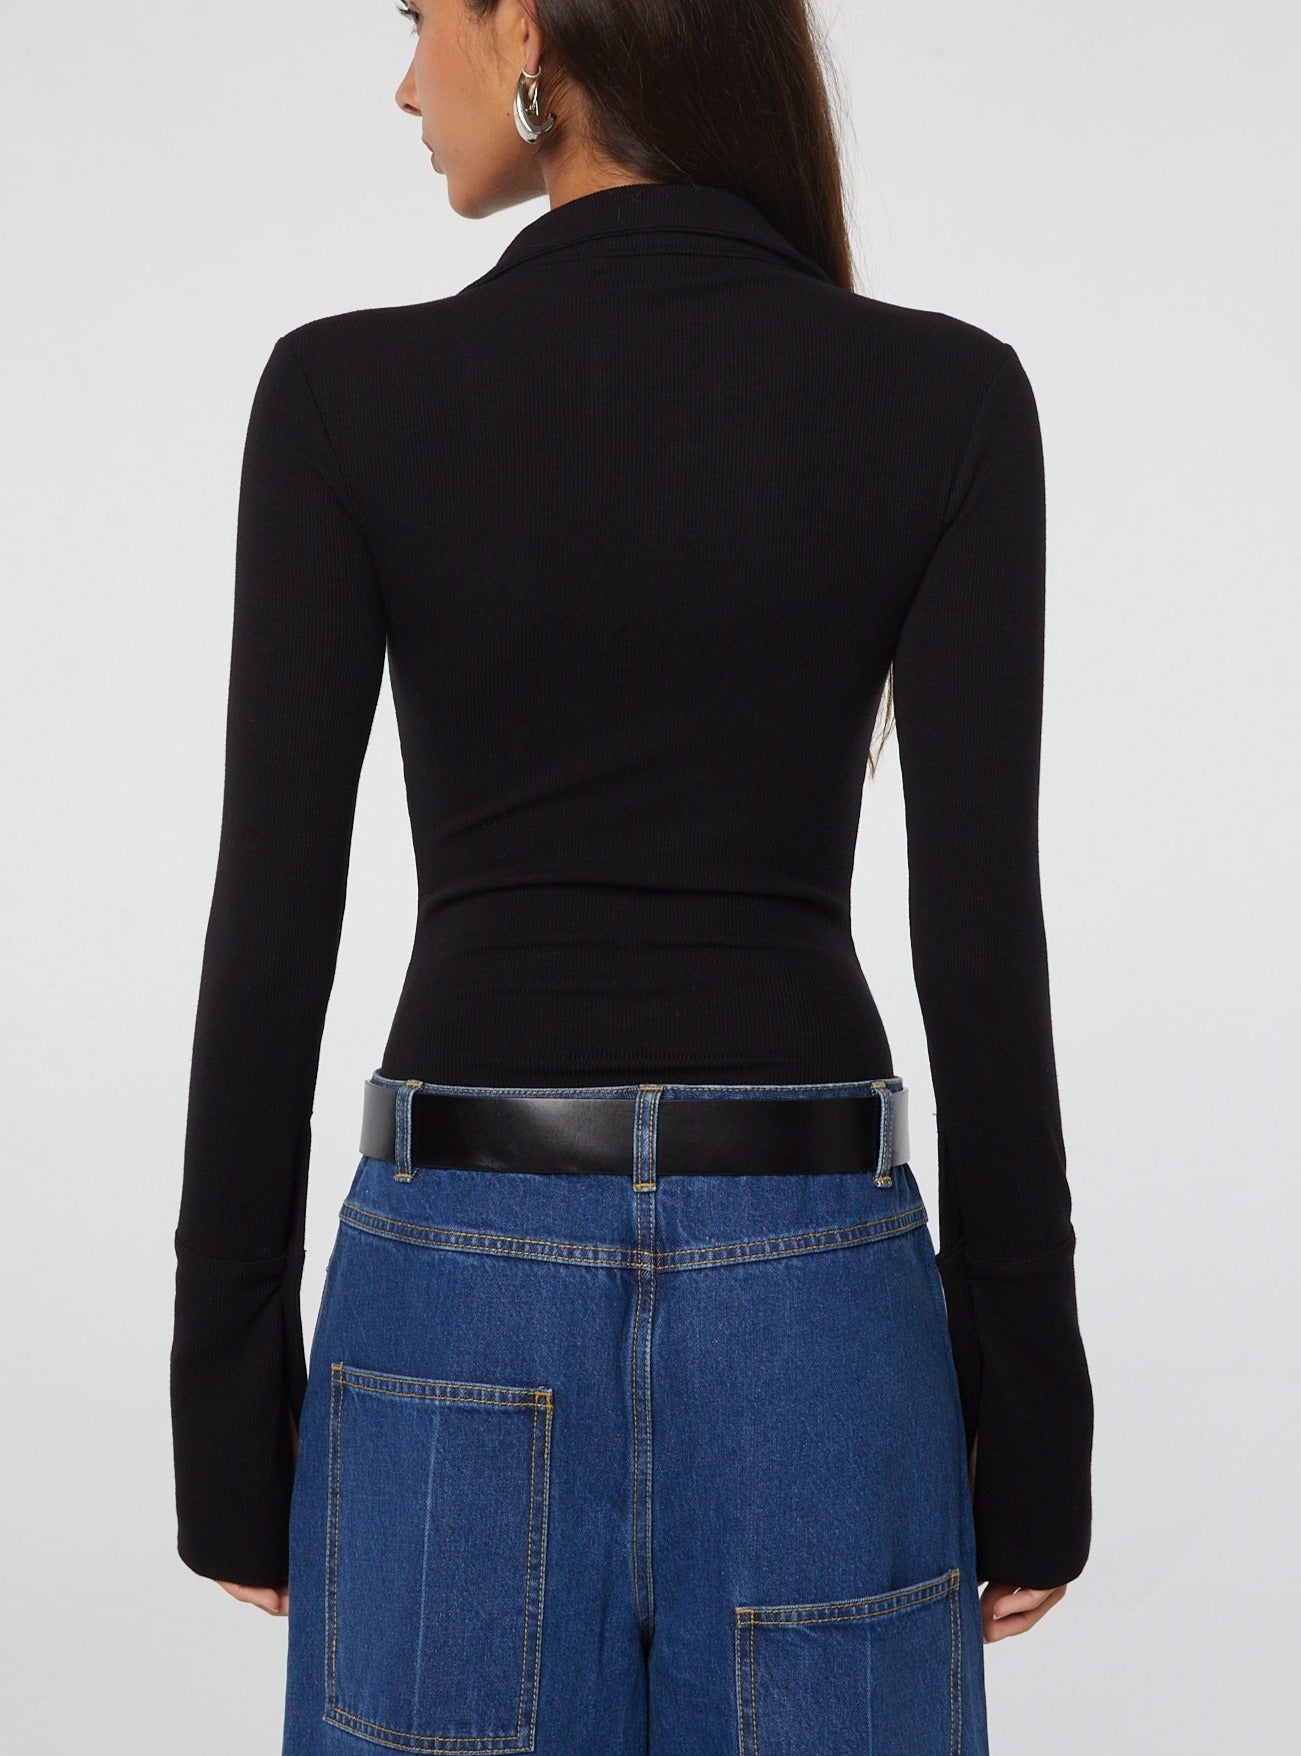 kili-bodysuit-black-the-line-by-k-249750.jpg